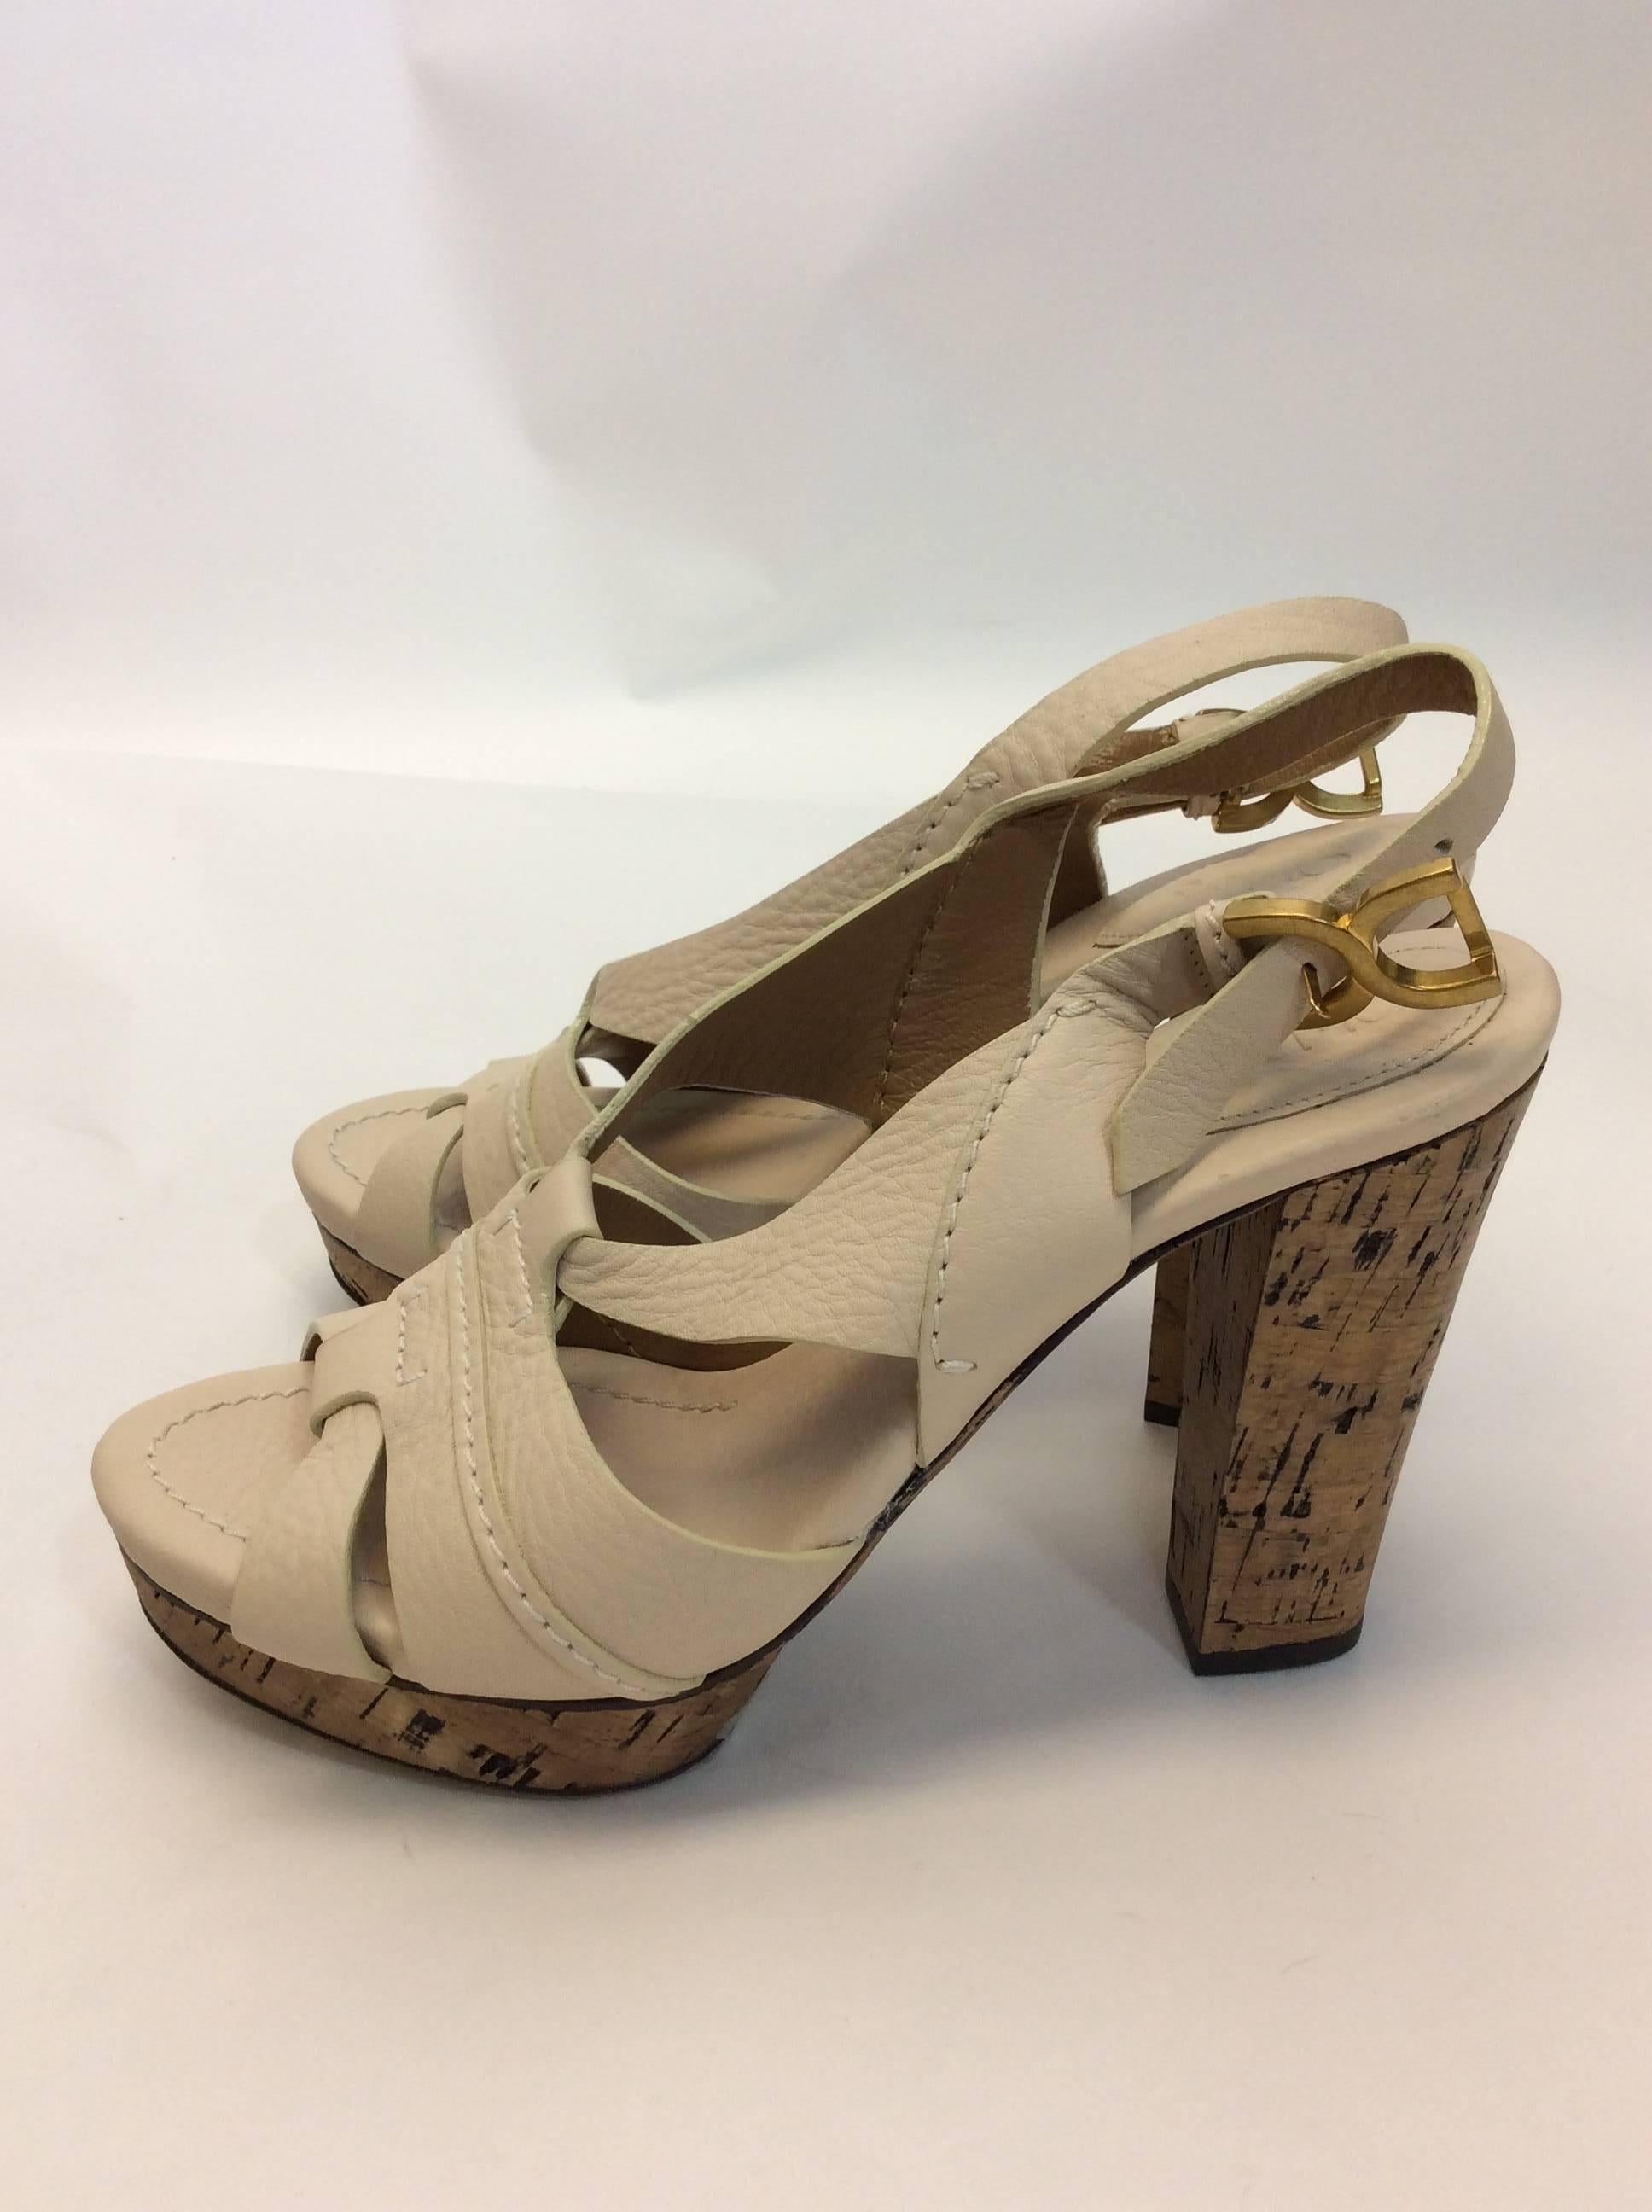 Chloe New Nude Leather Cork Heels
Original price: $695
4.5 inch heel, 1 inch platform
Gold buckle
Size 39.5
$299
